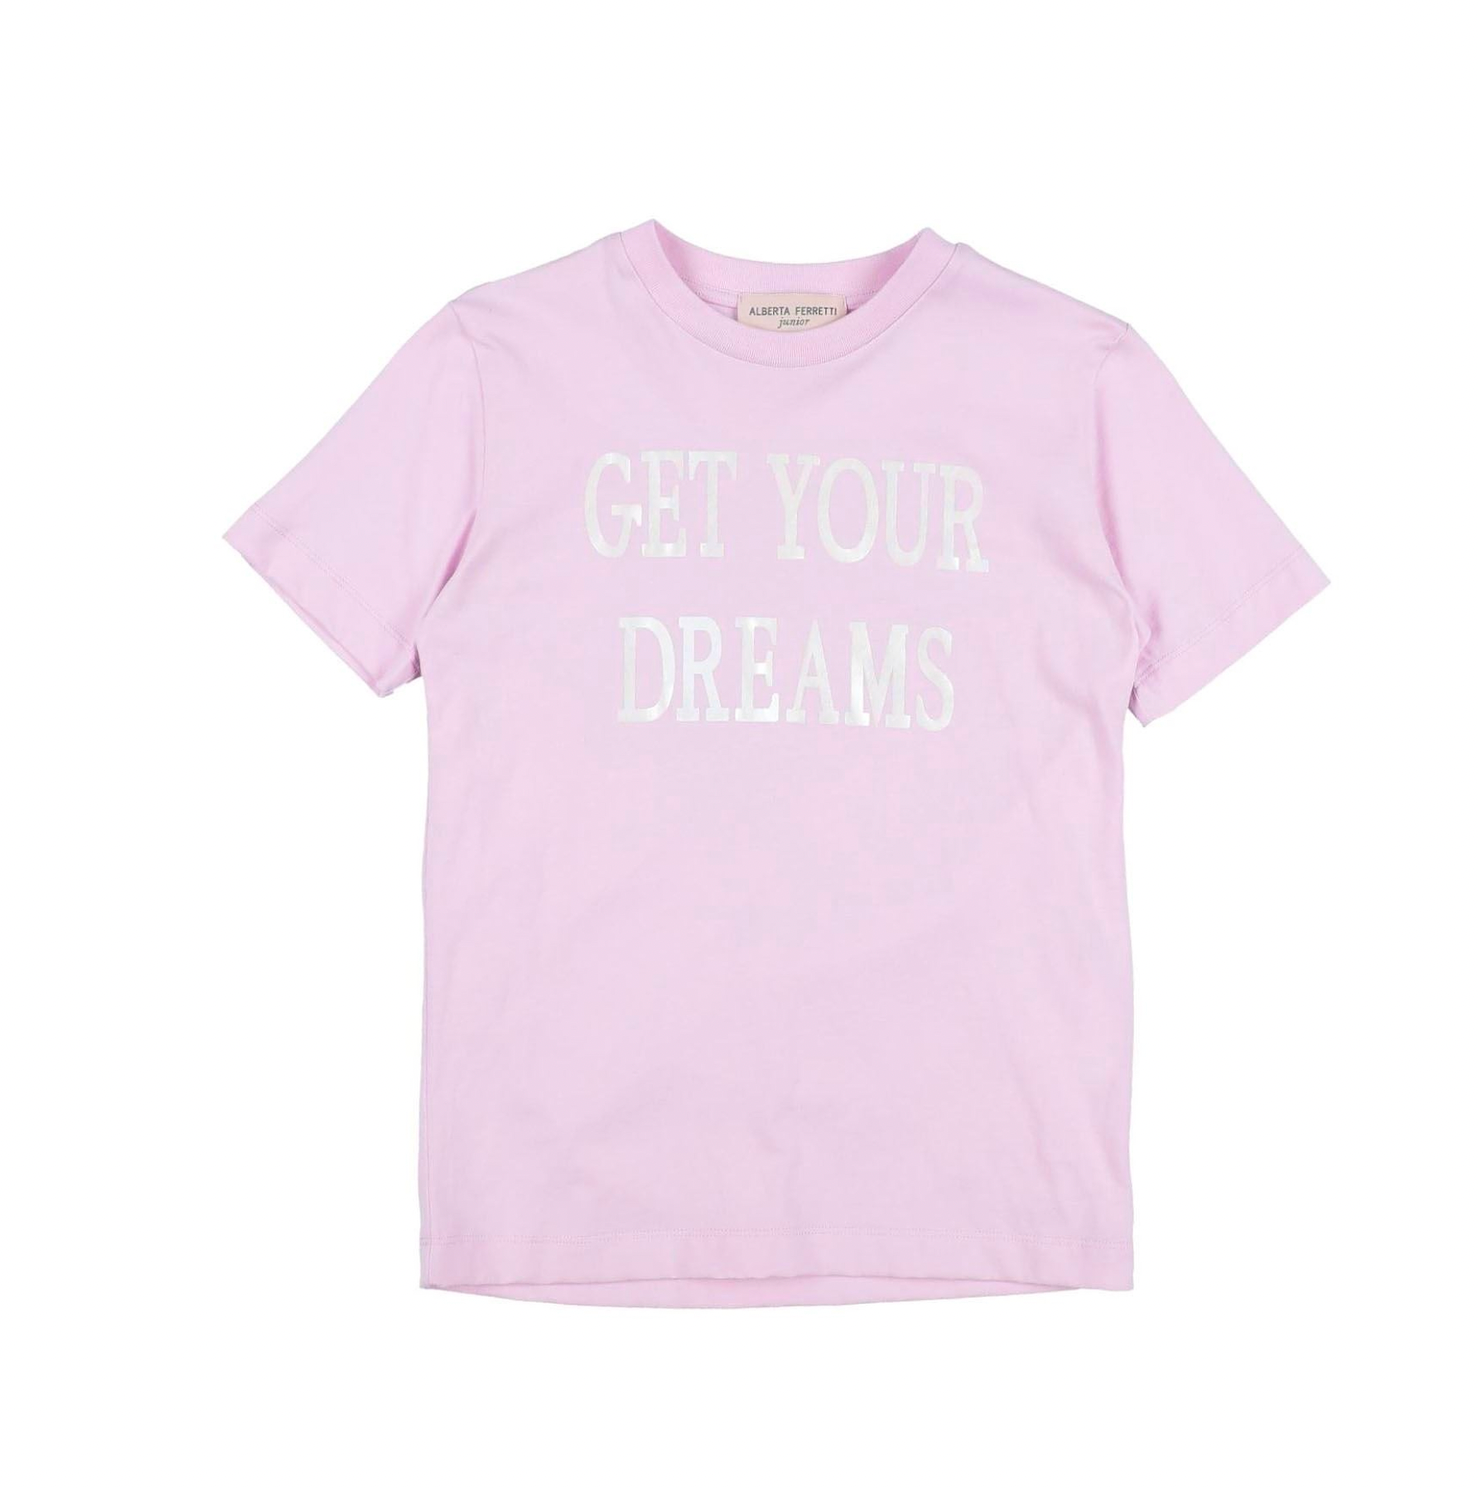 ALBERTA FERRETTI - T-shirt "get your dreams" - 4 ans